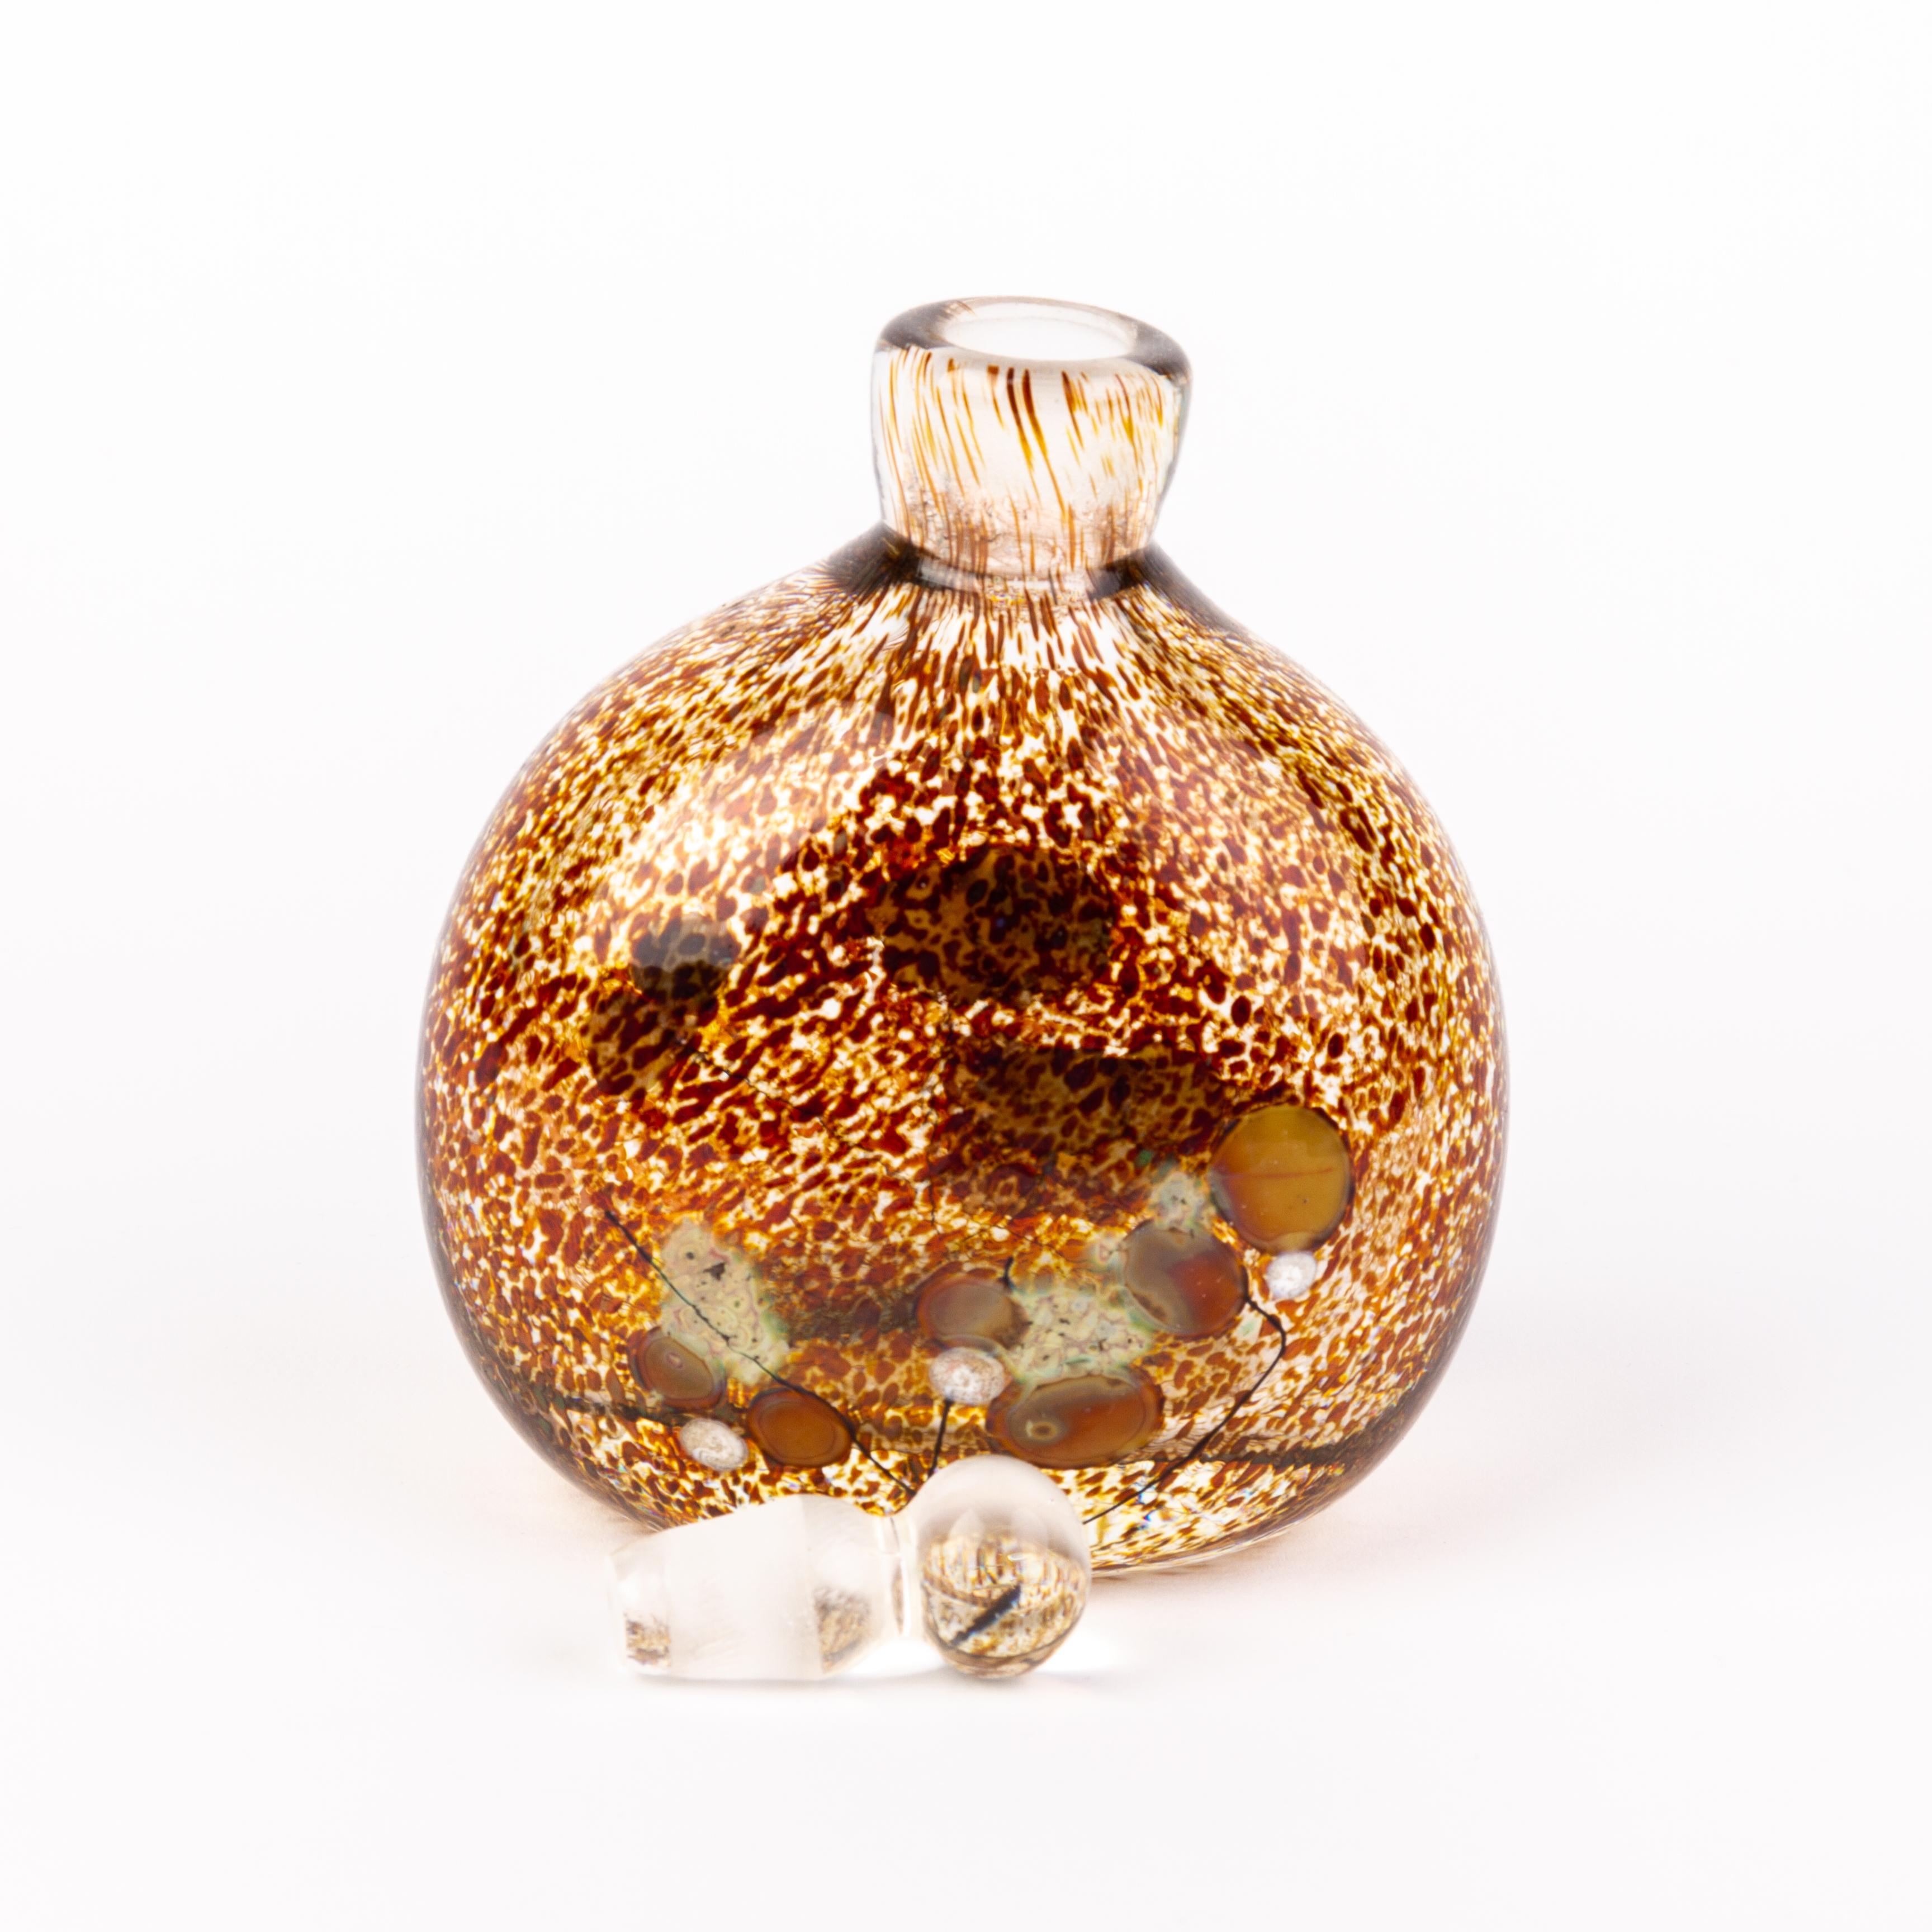 Ex Gallery Exhibition Splatter Glass Perfume Bottle 1